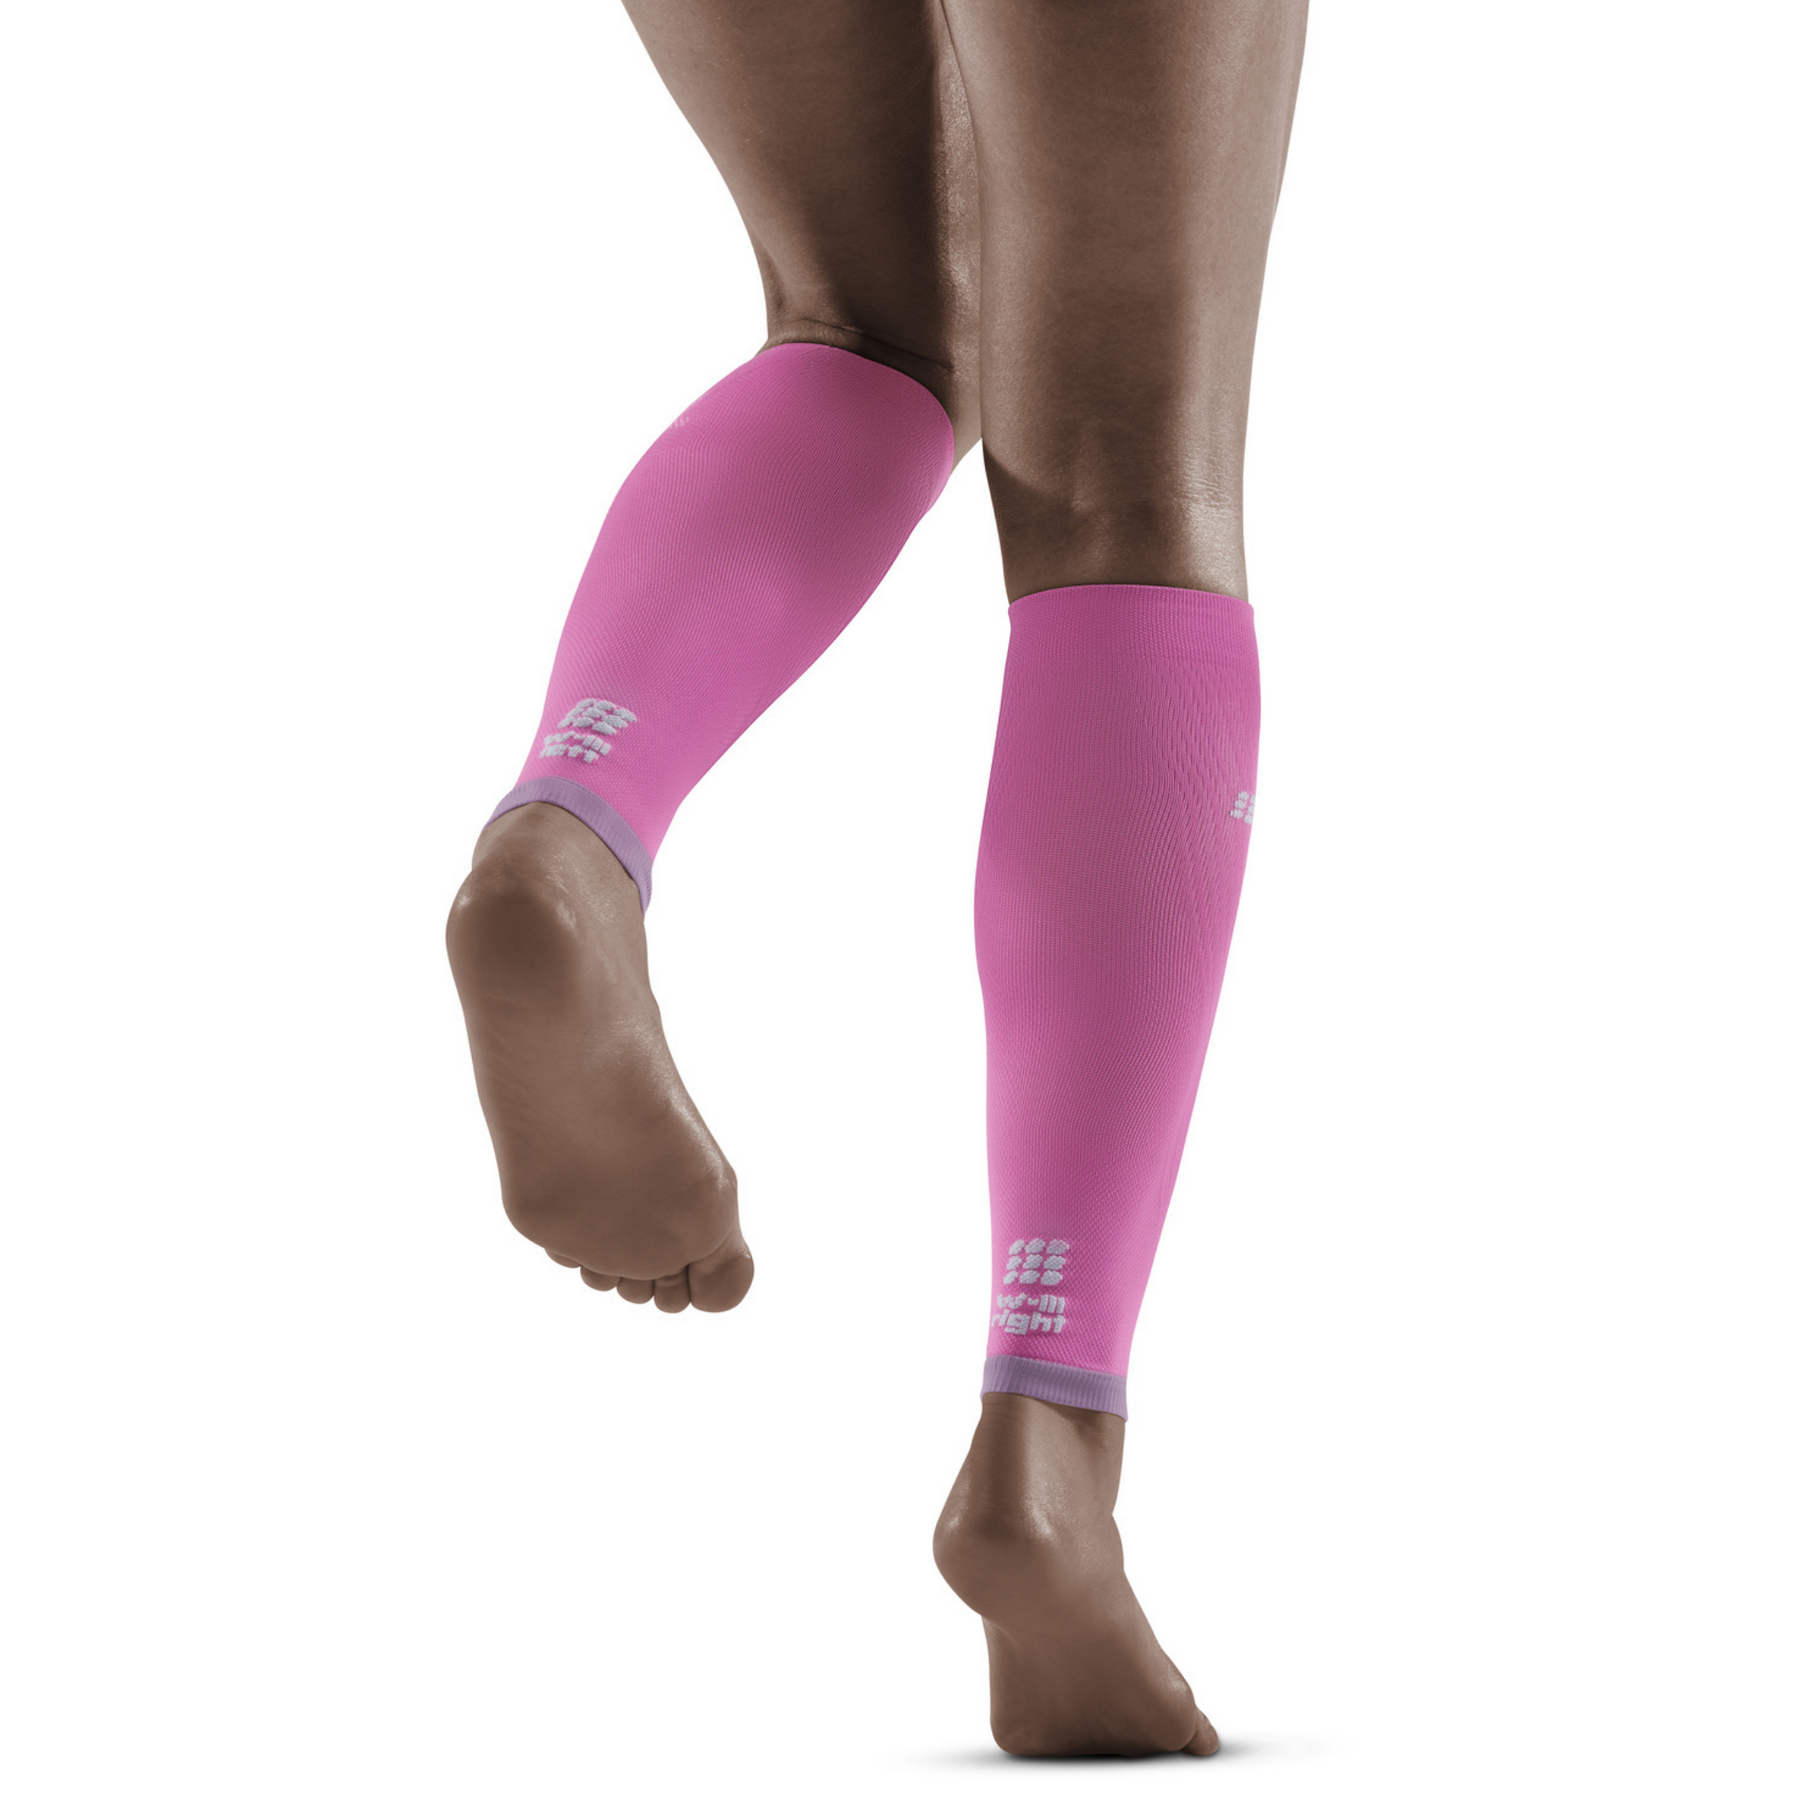  Calf Compression Sleeves,BCDlily Leg Compression Socks